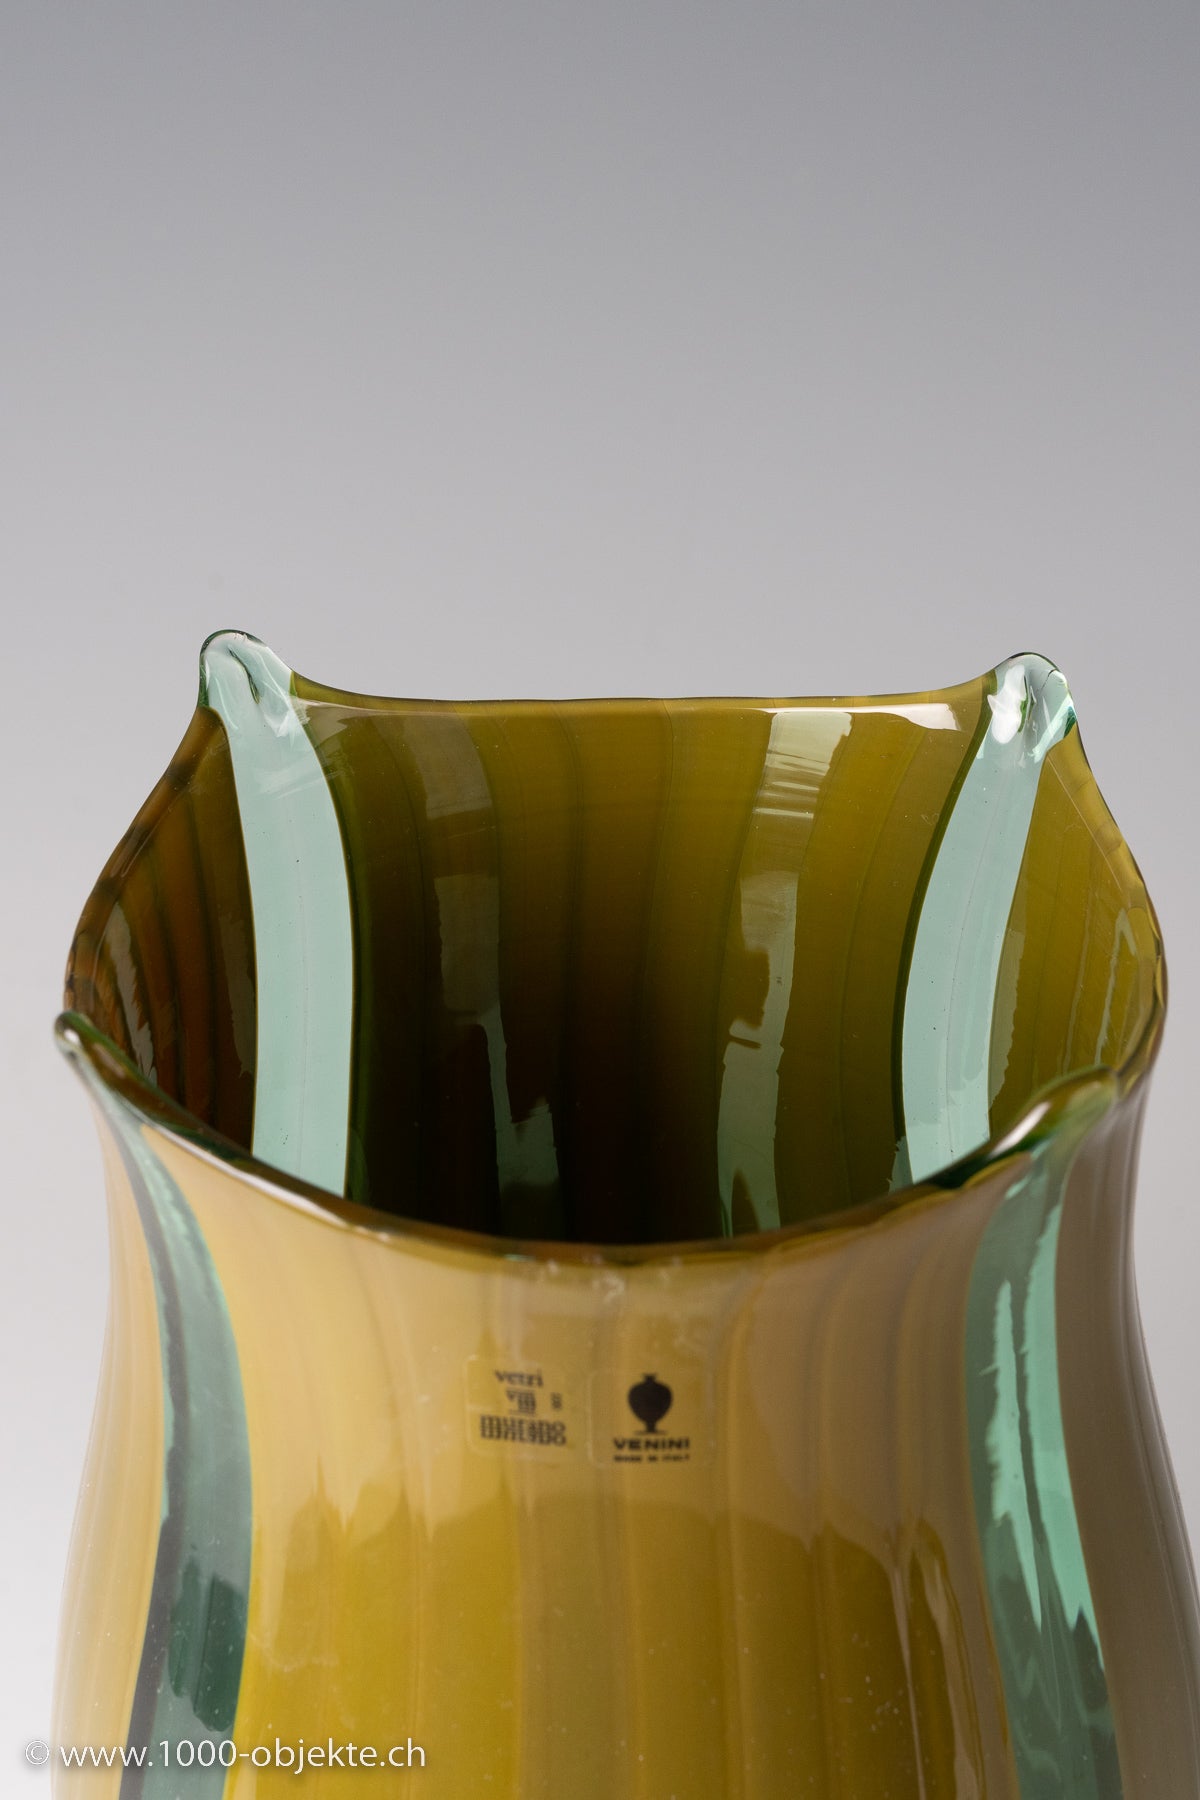 Vases 'Barena' Venini & C., Murano, designed by Toni Zuccheri, 1981